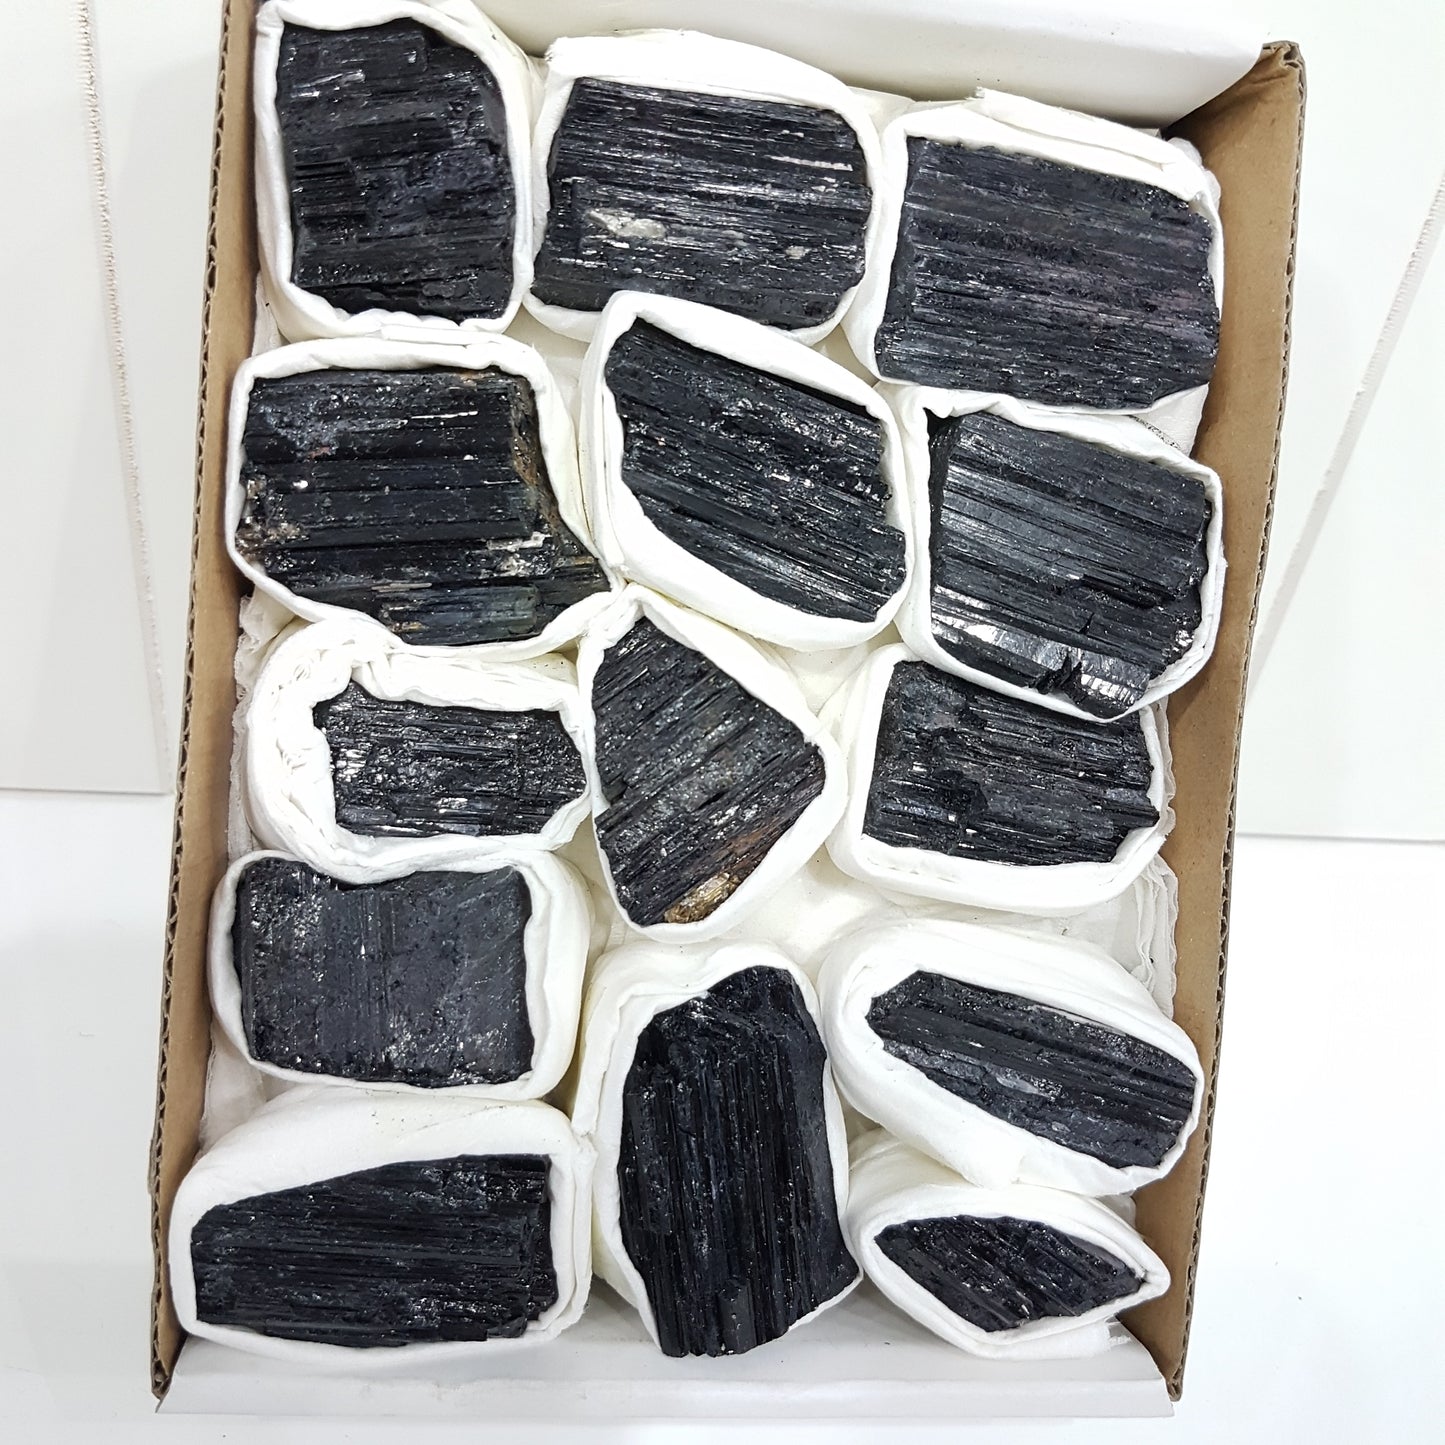 Box of Black Tourmaline Gemstones